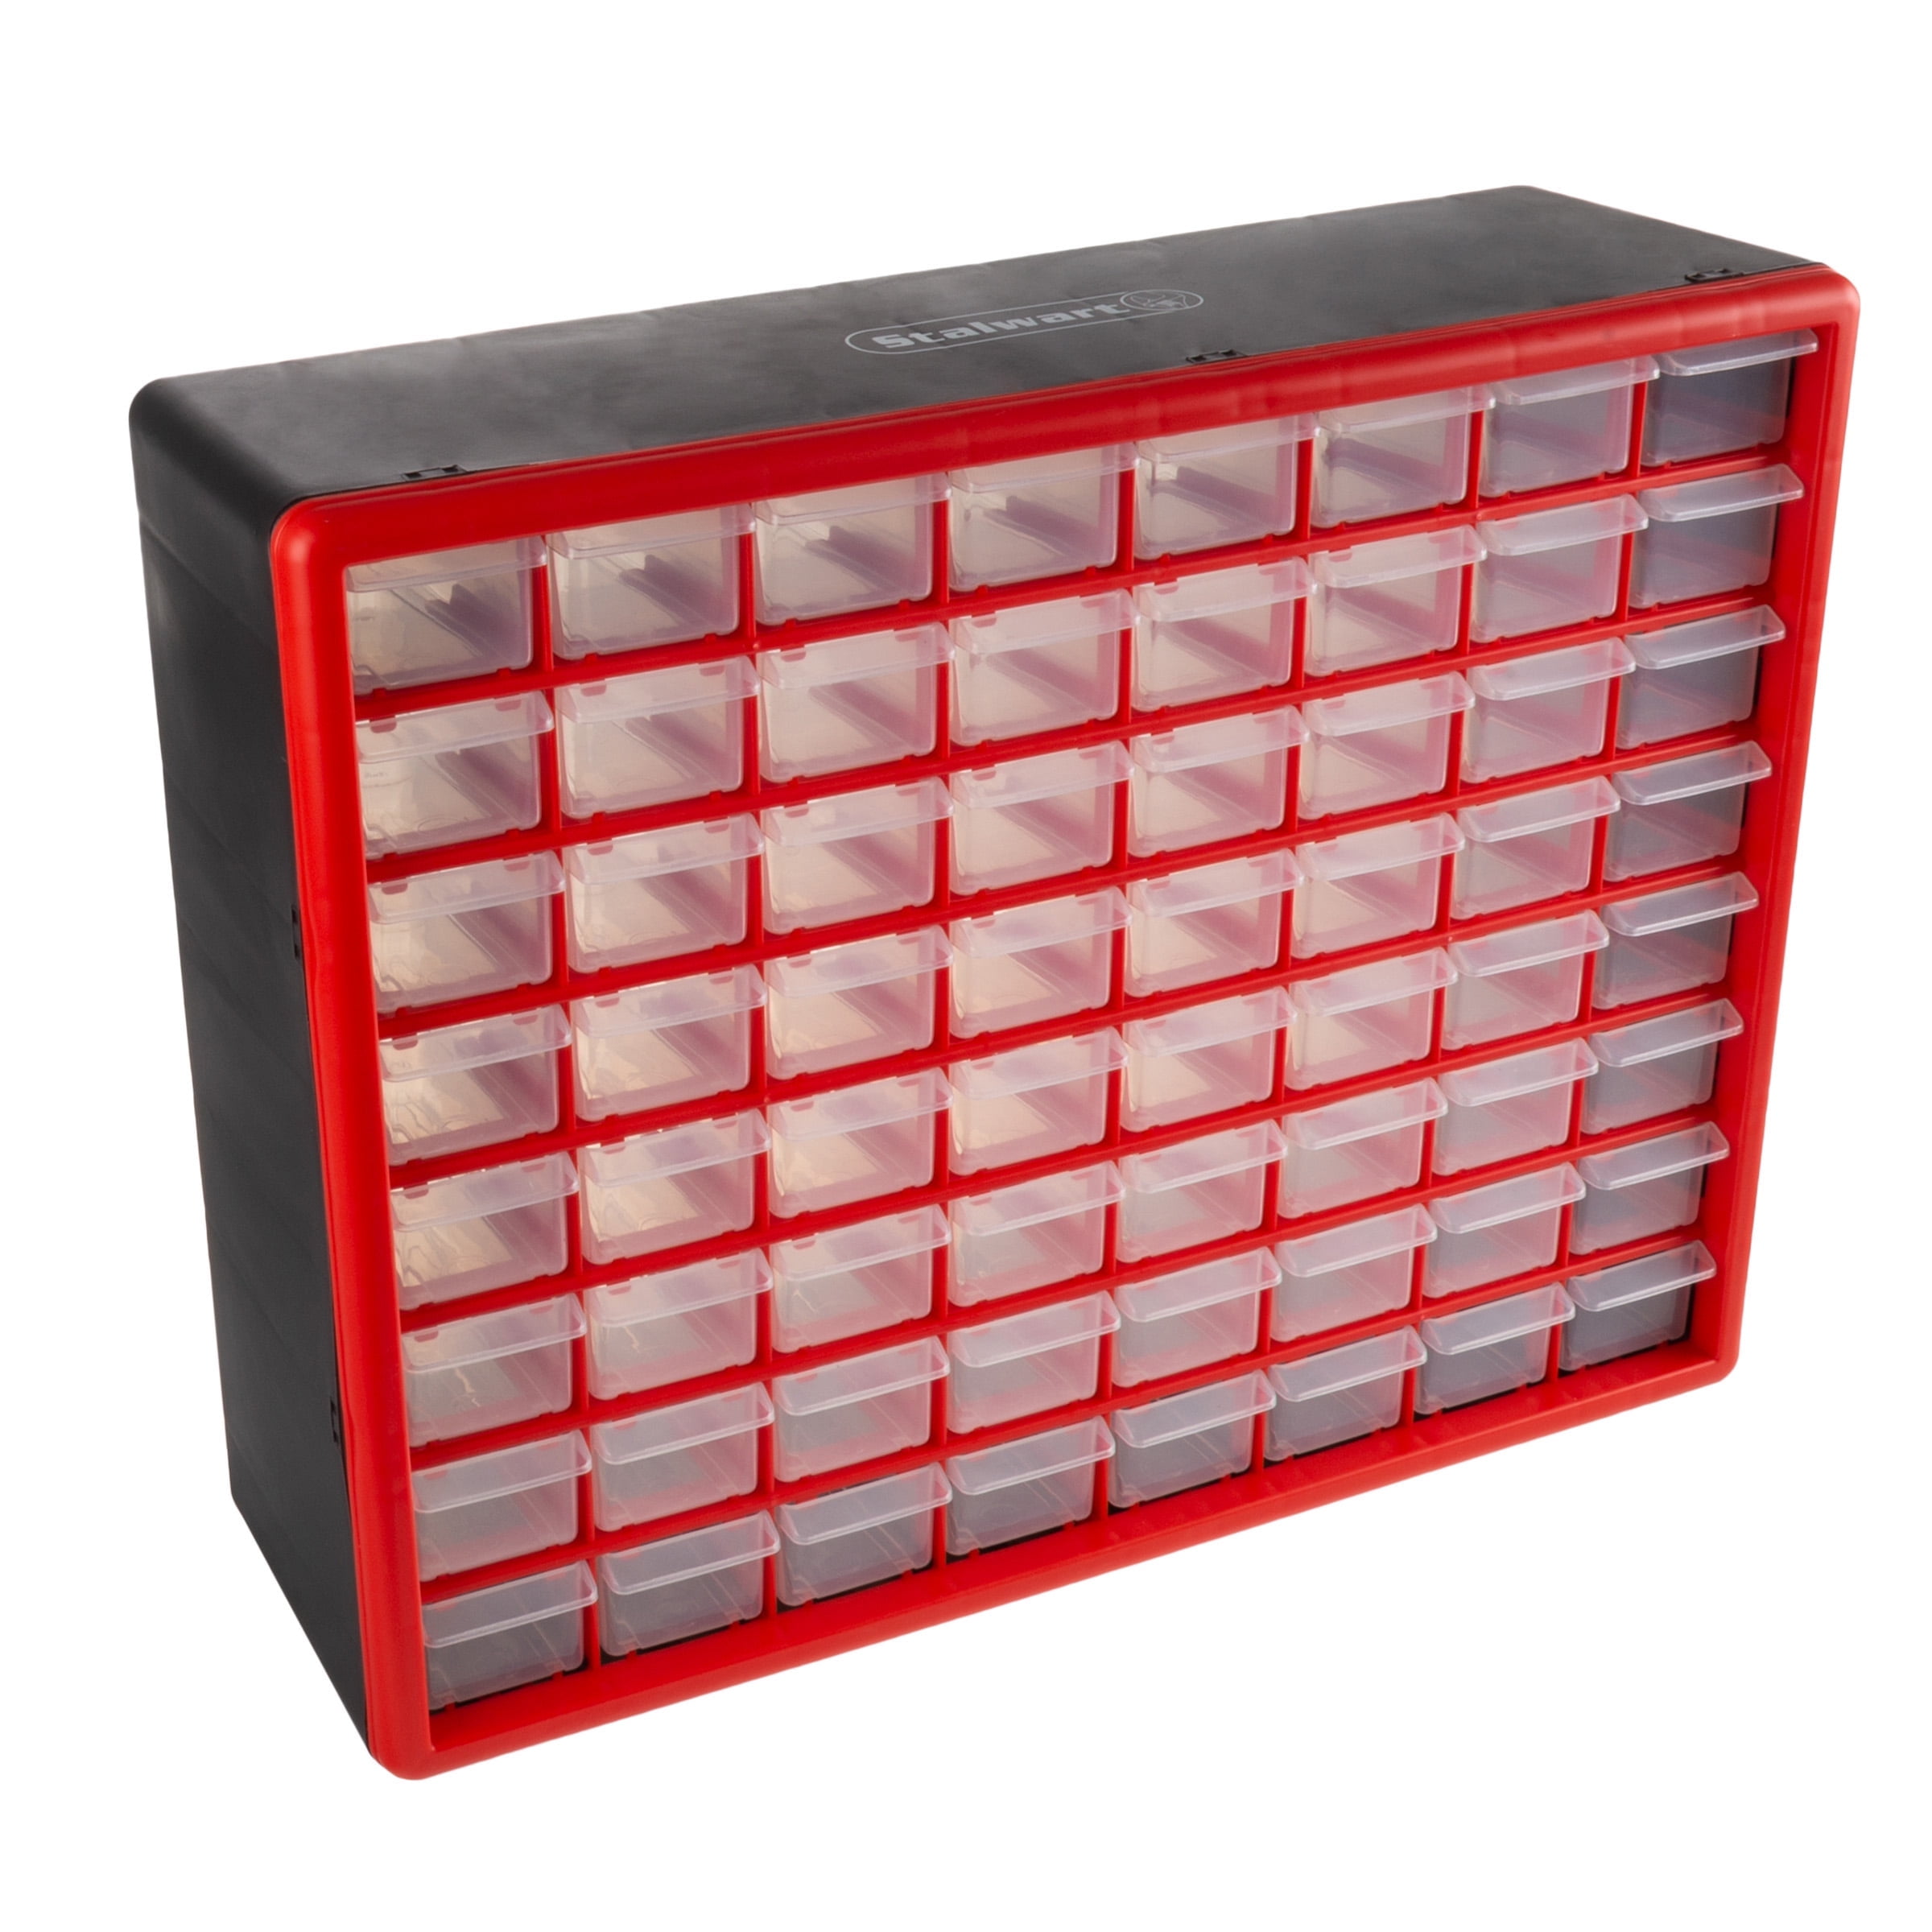 Stalwart Mountable Storage Organizer-64 Compartment's